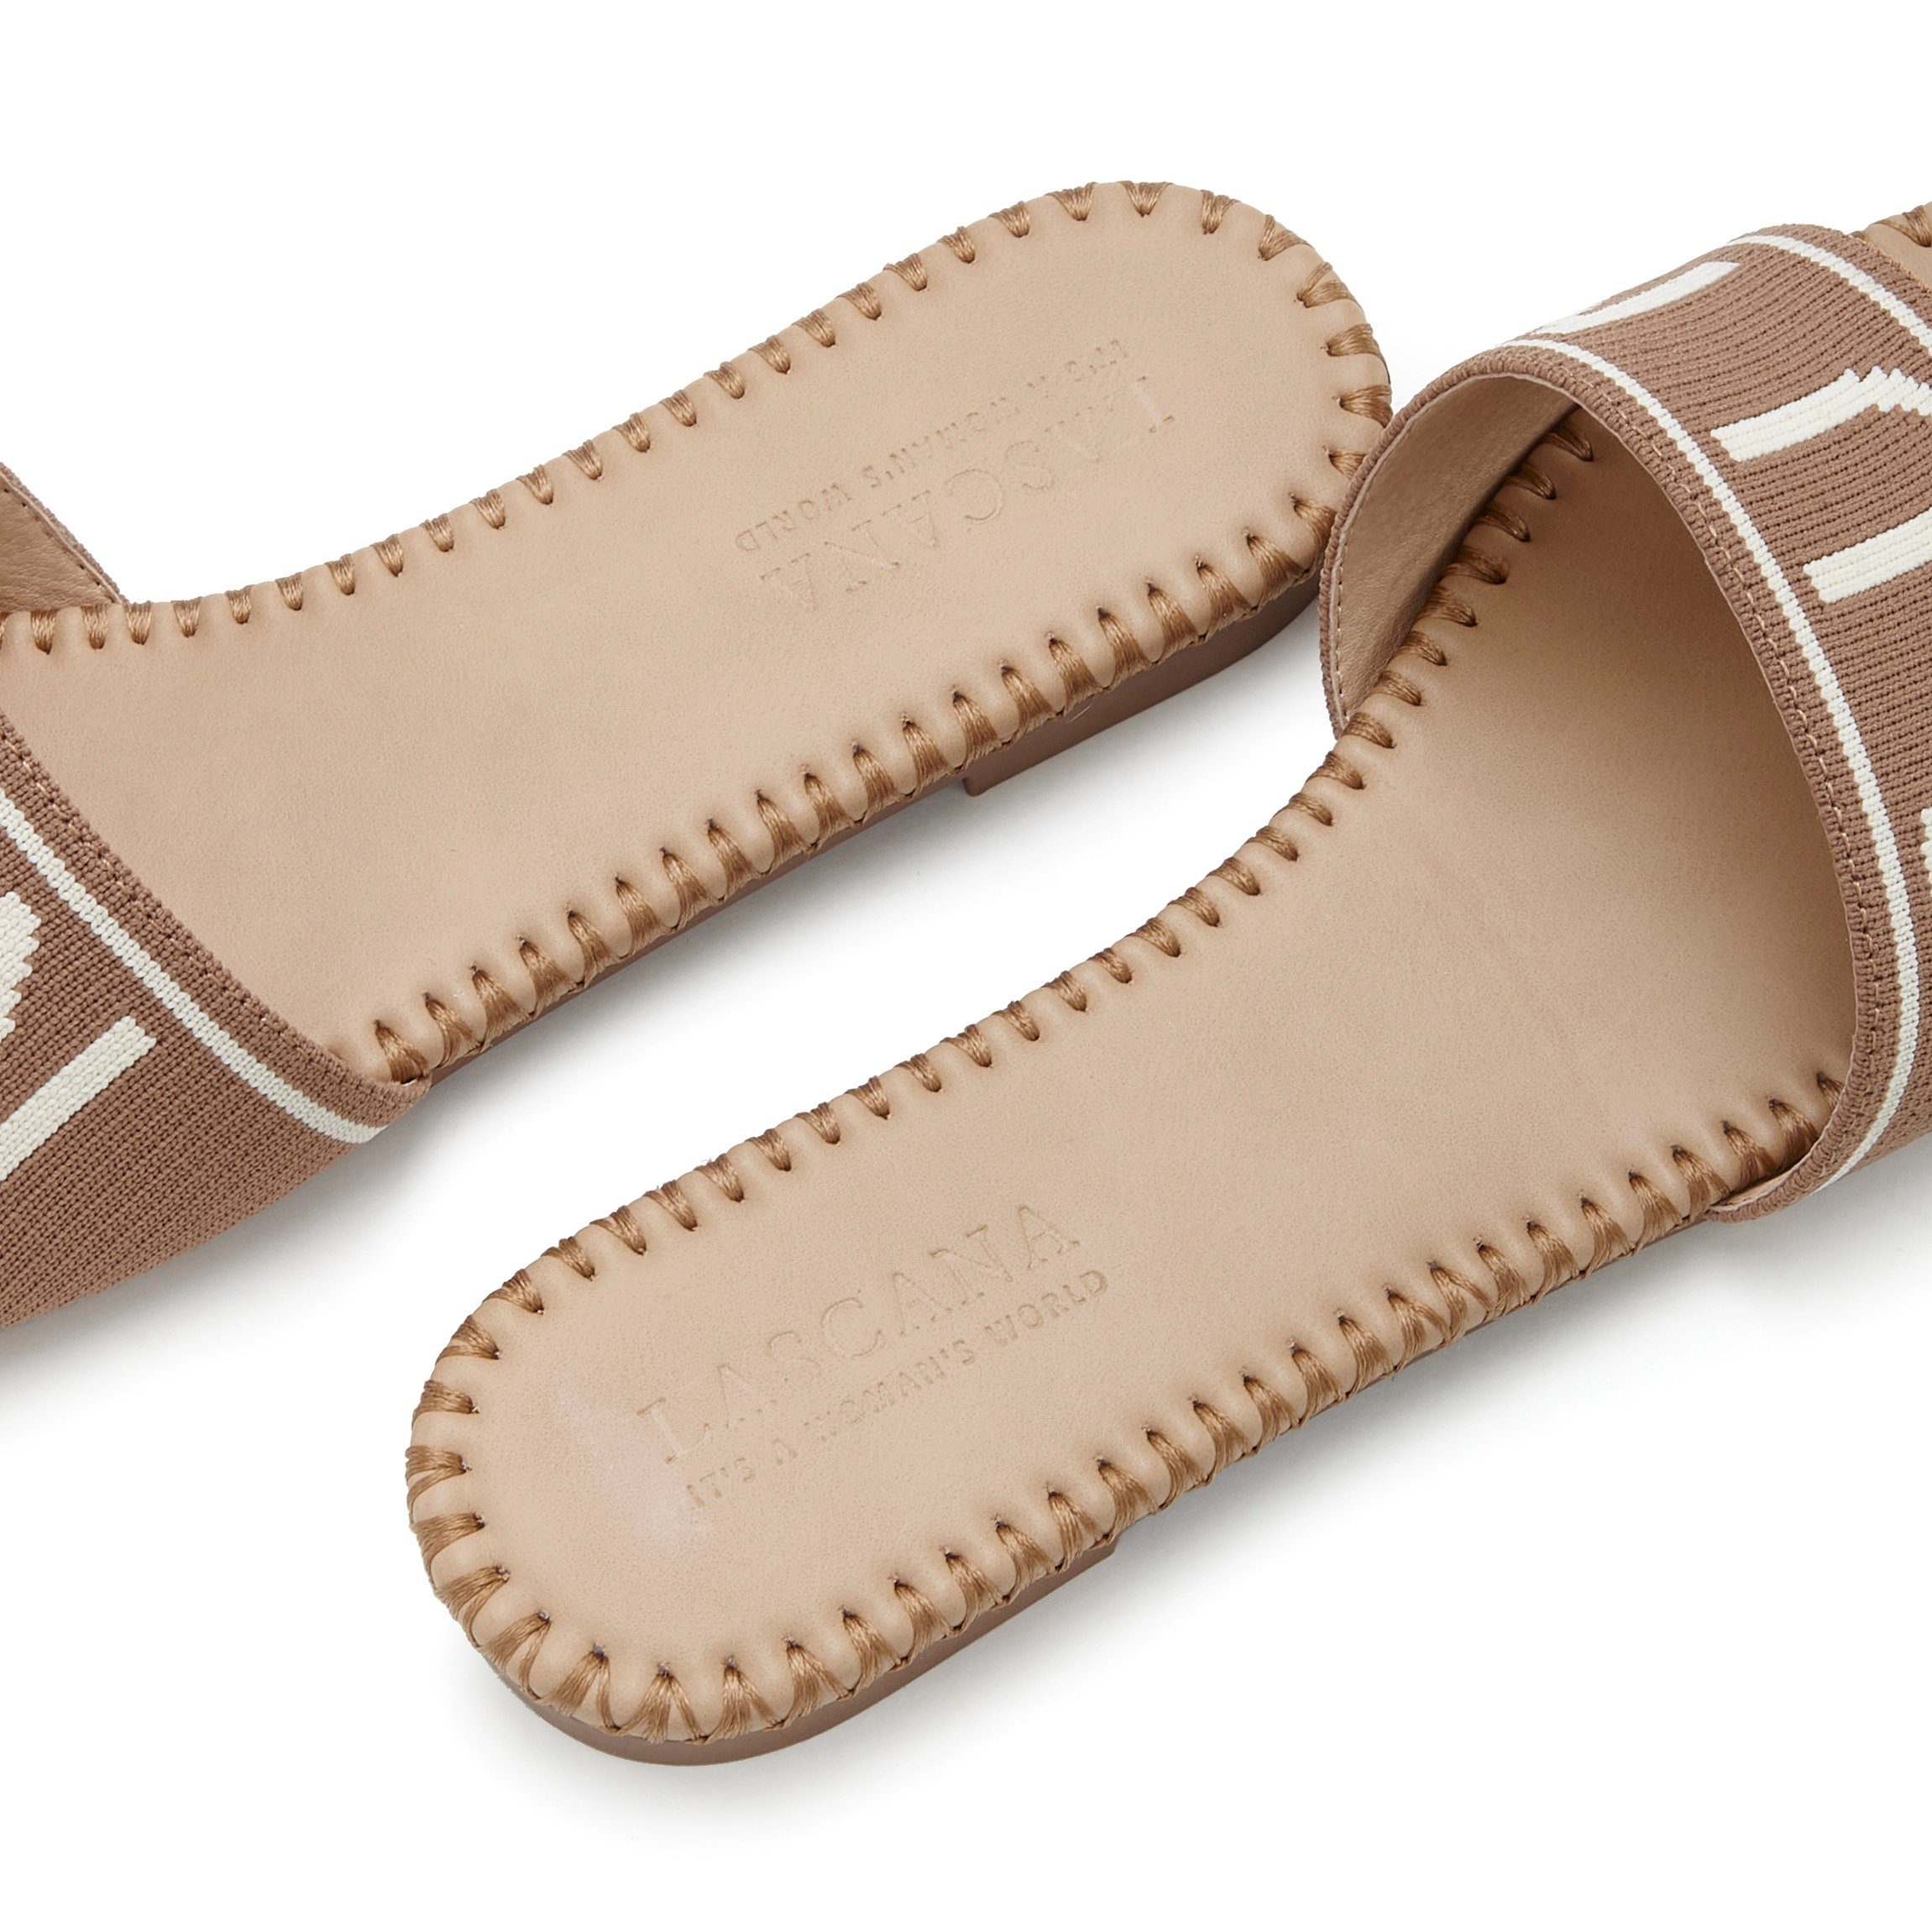 Textil Schriftzug VEGAN mit Pantolette offener modischem taupe LASCANA Schuh Sandale, Mule, aus